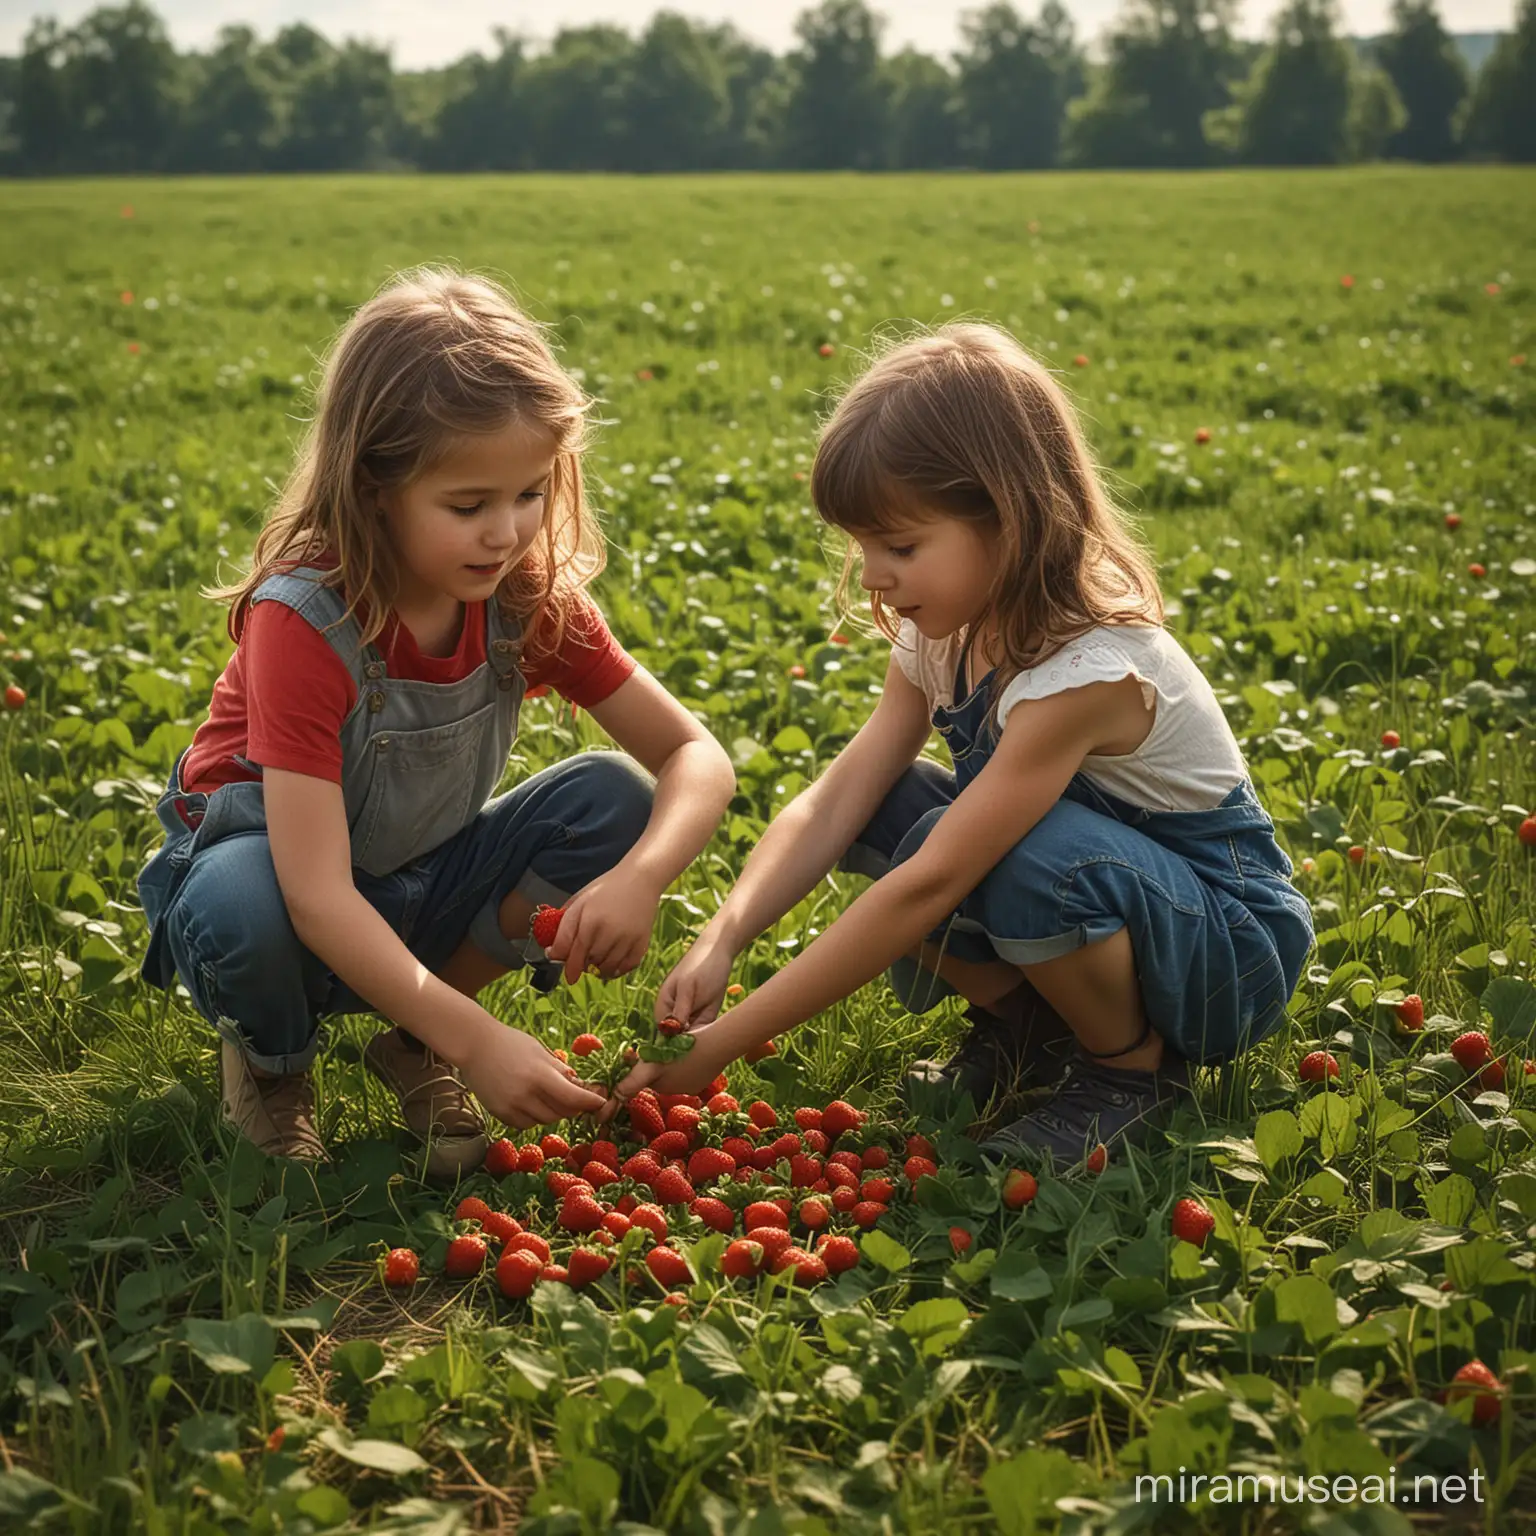 Children Gathering Strawberries in Contrajour Field